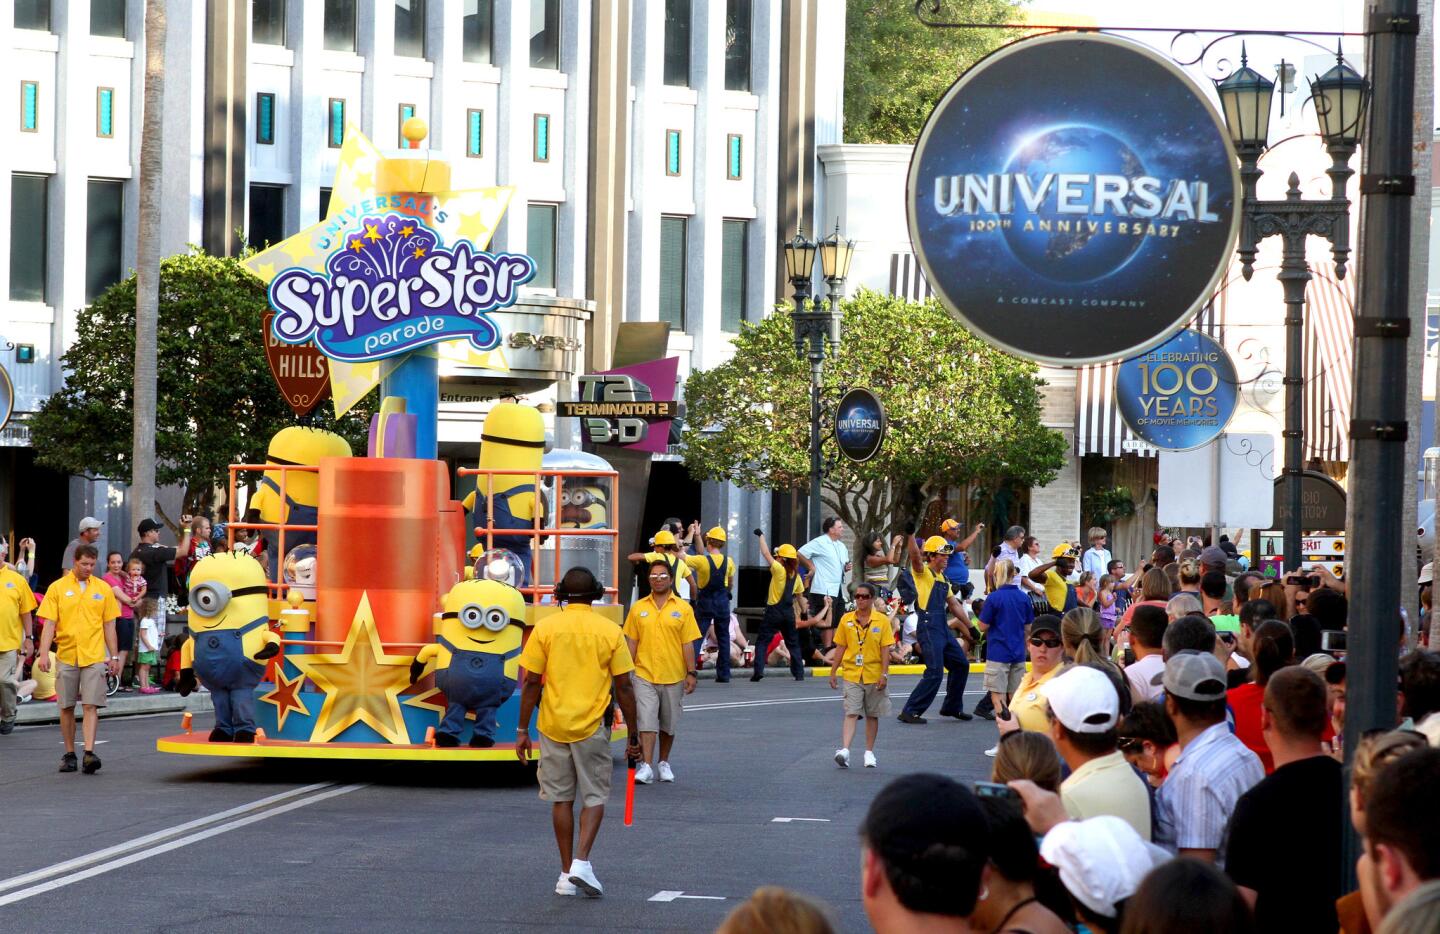 Universal's SuperStar Parade